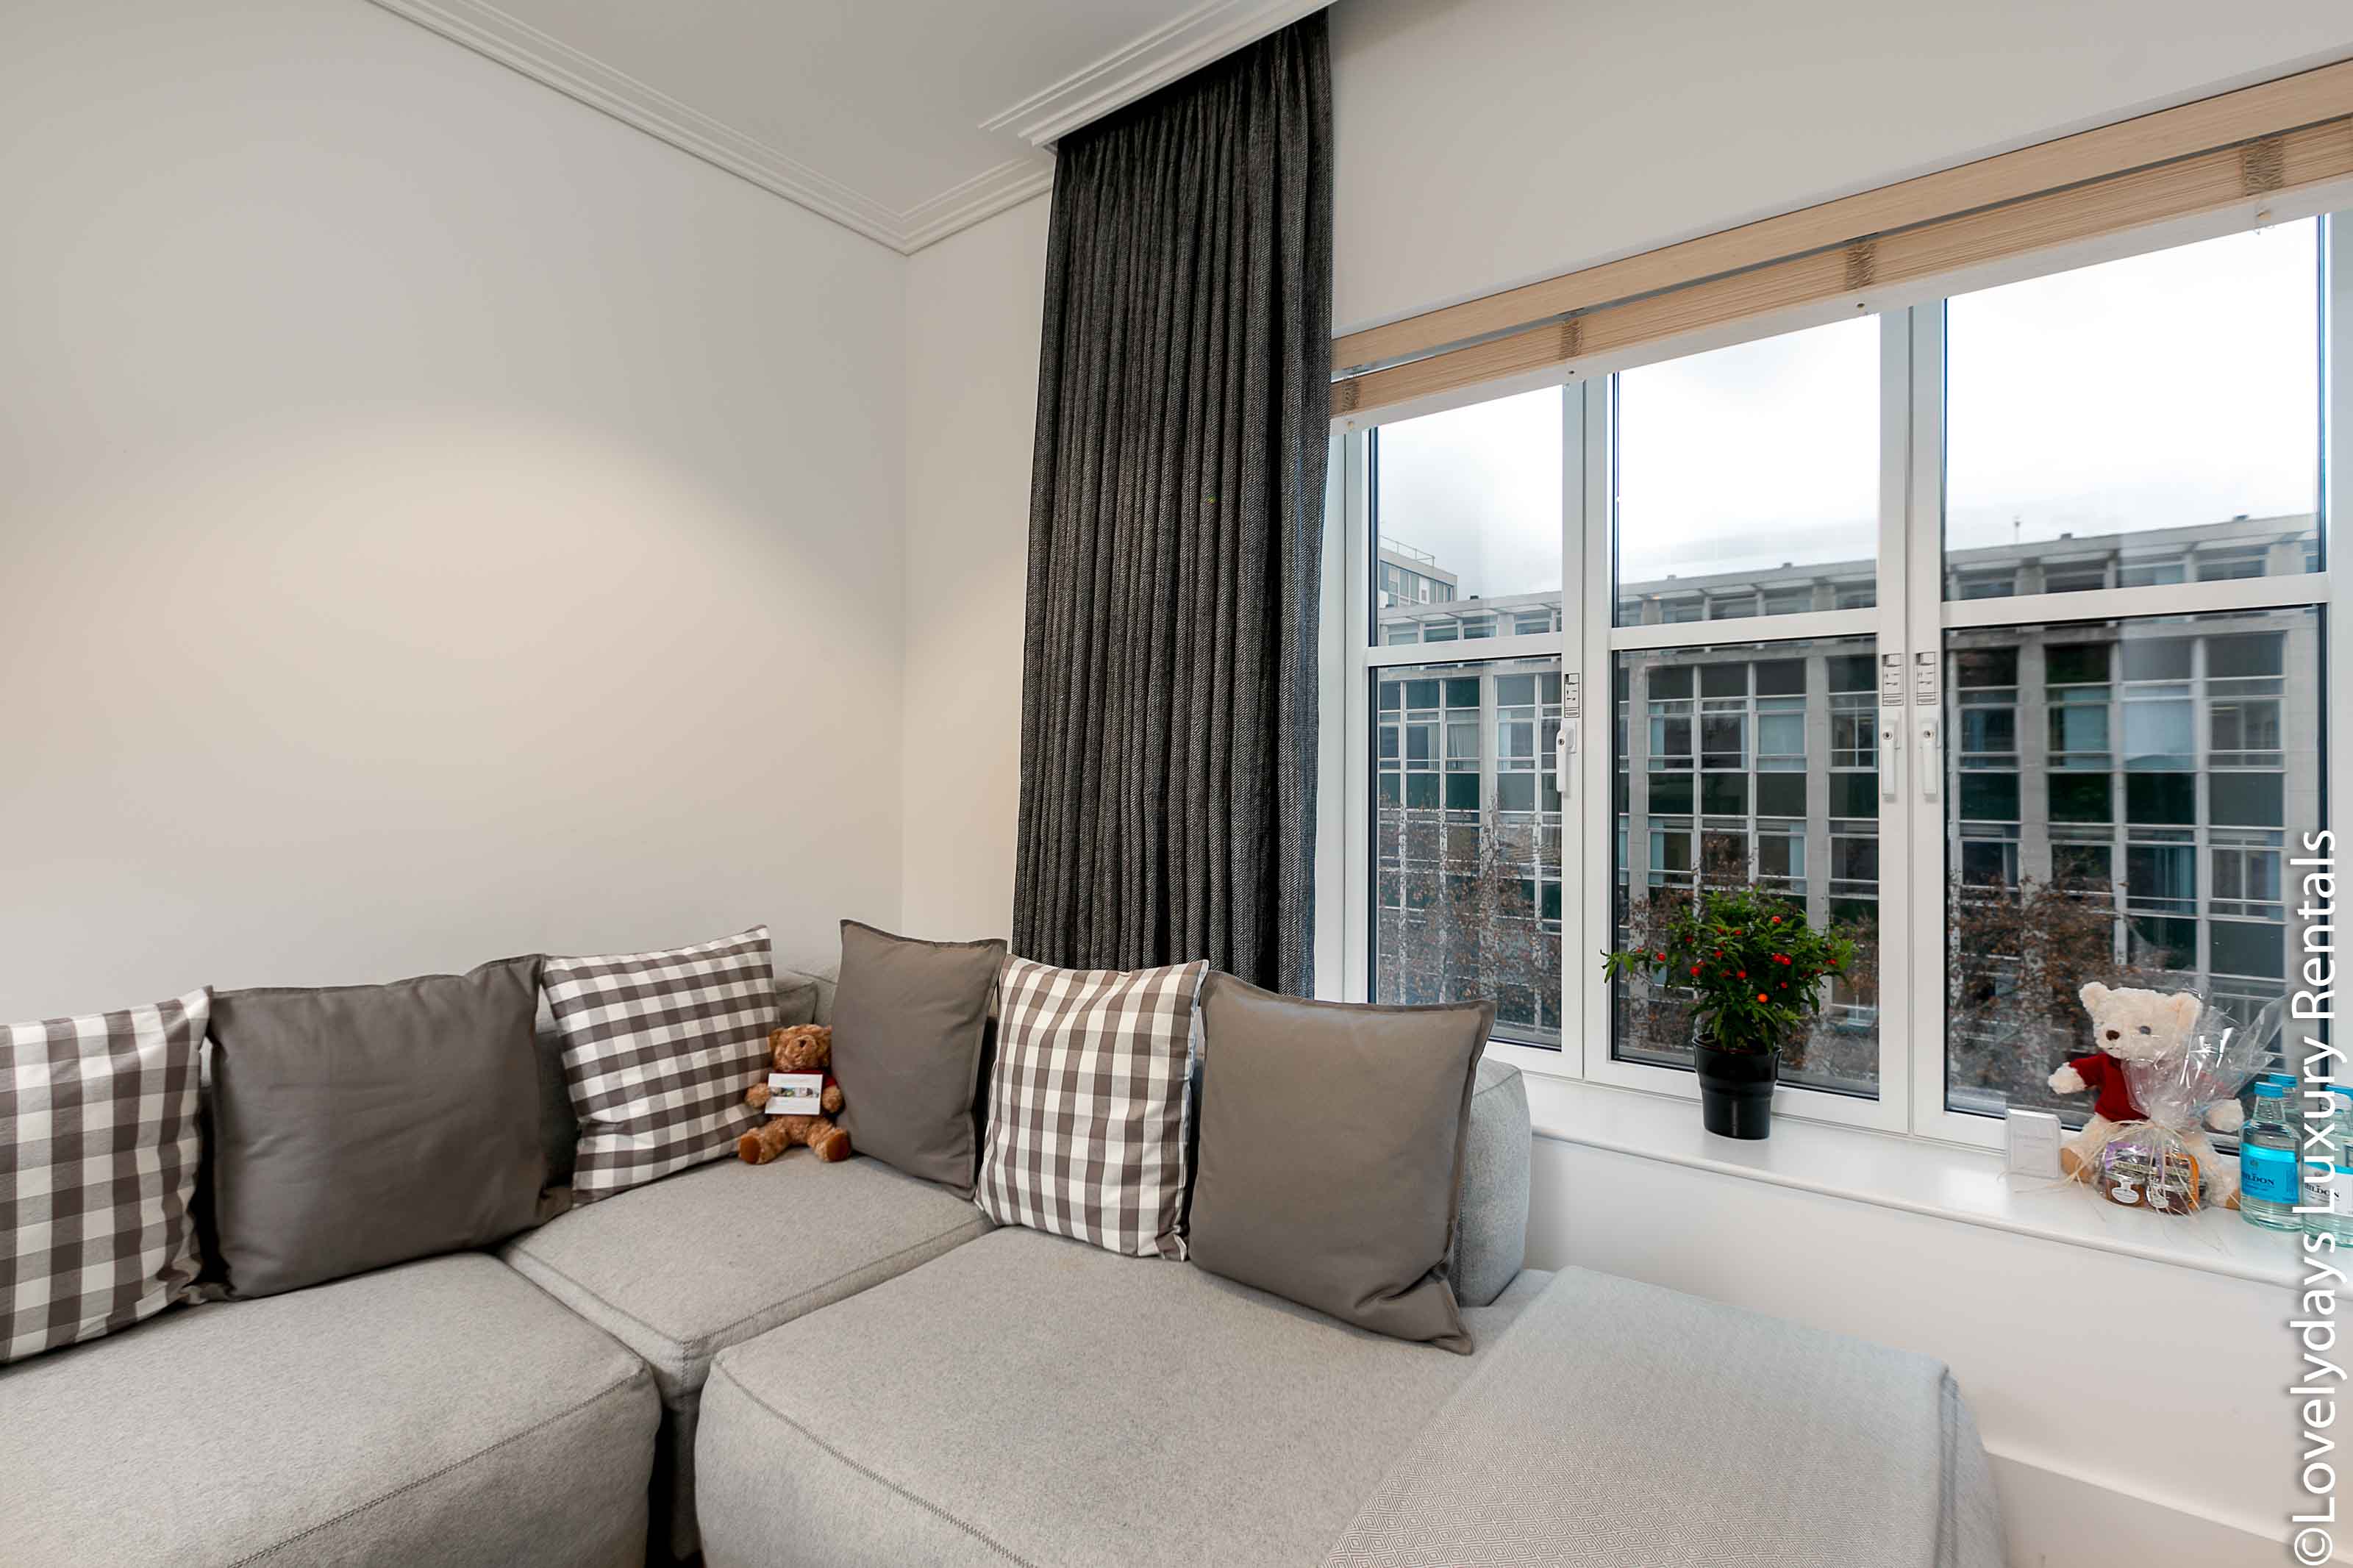 Lovelydays luxury service apartment rental - London - Covent Garden - Prince's House 601 - Lovelysuite - 2 bedrooms - 1 bathrooms - Comfortable sofa - d869d49e6680 - Lovelydays